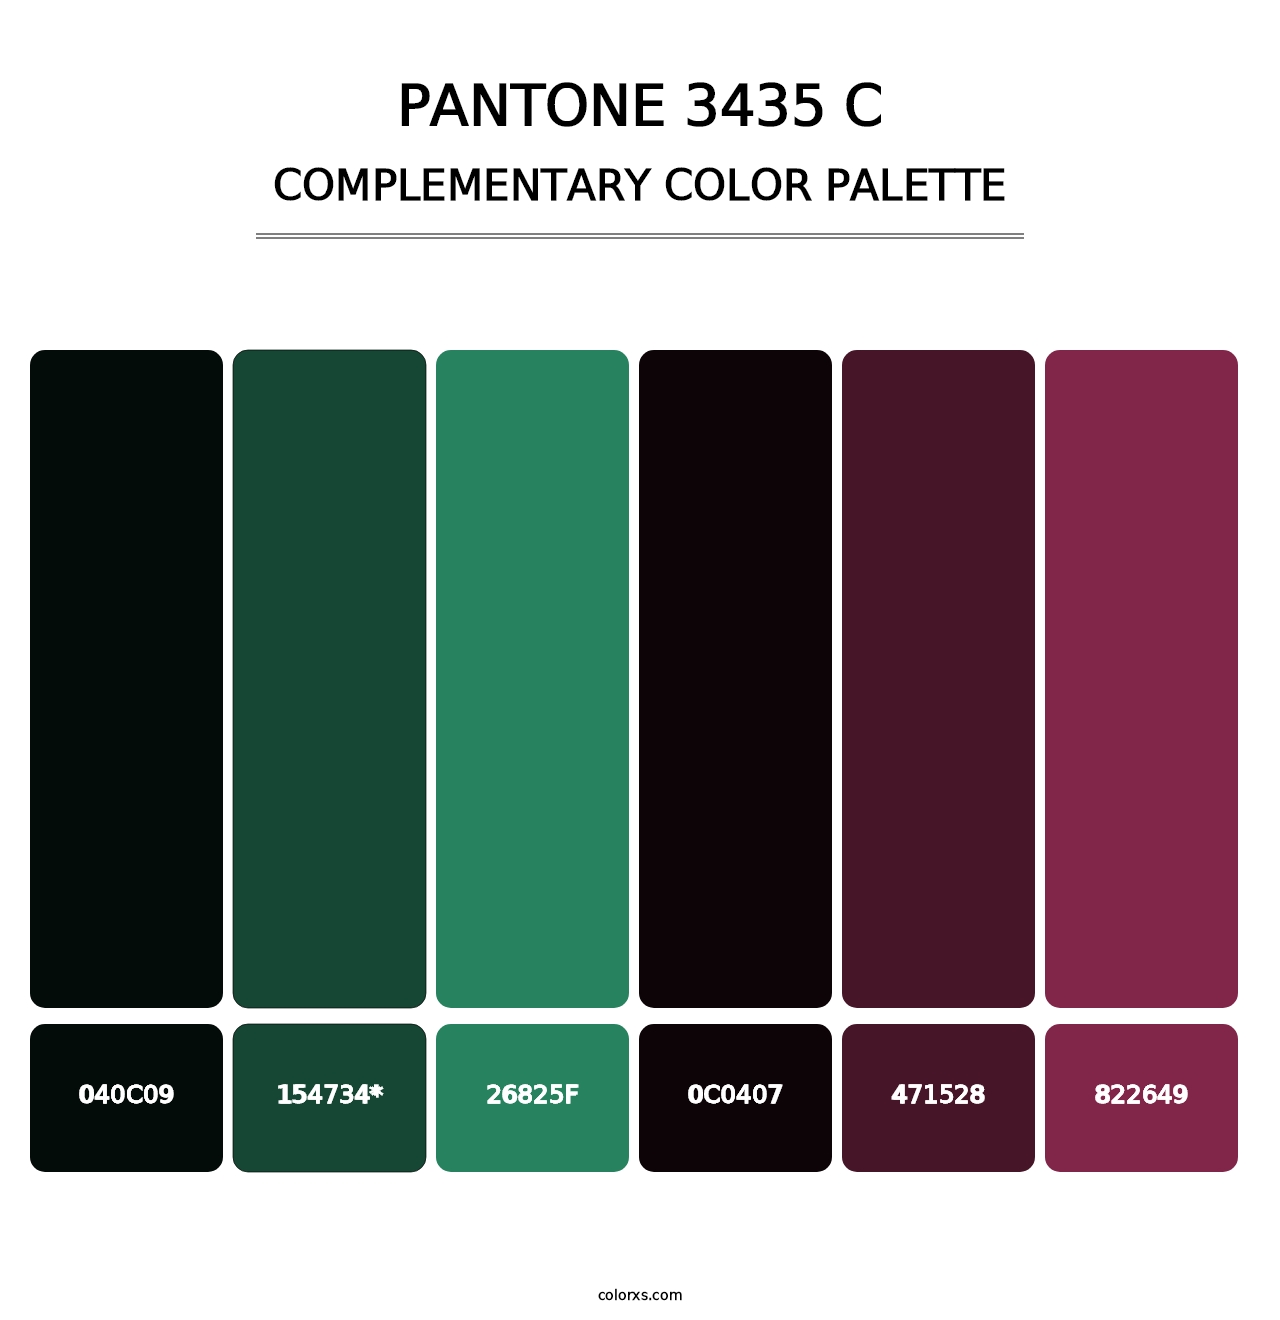 PANTONE 3435 C - Complementary Color Palette